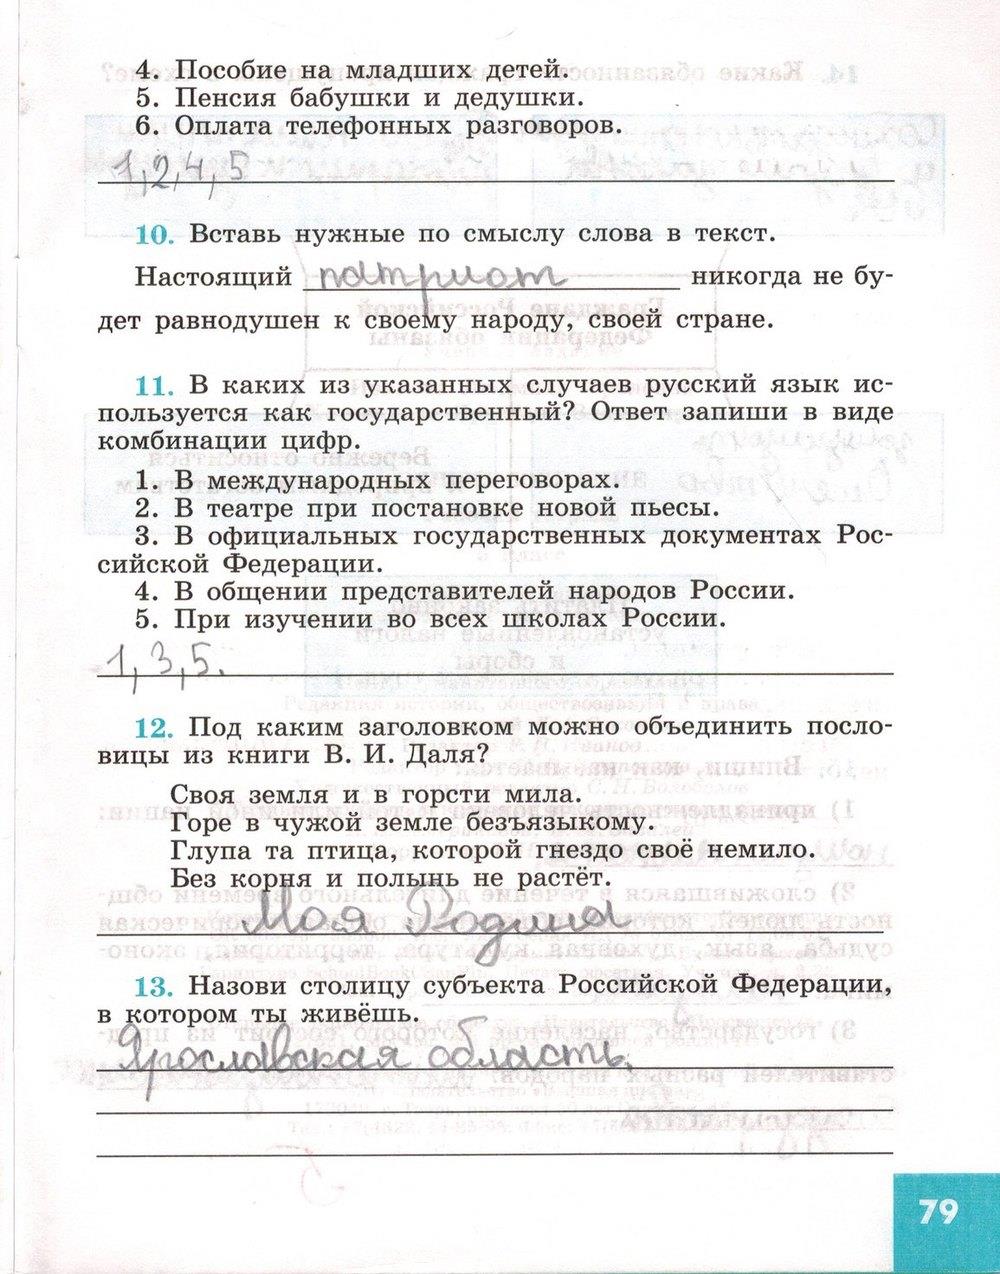 гдз 5 класс рабочая тетрадь страница 79 обществознание Иванова, Хотеенкова